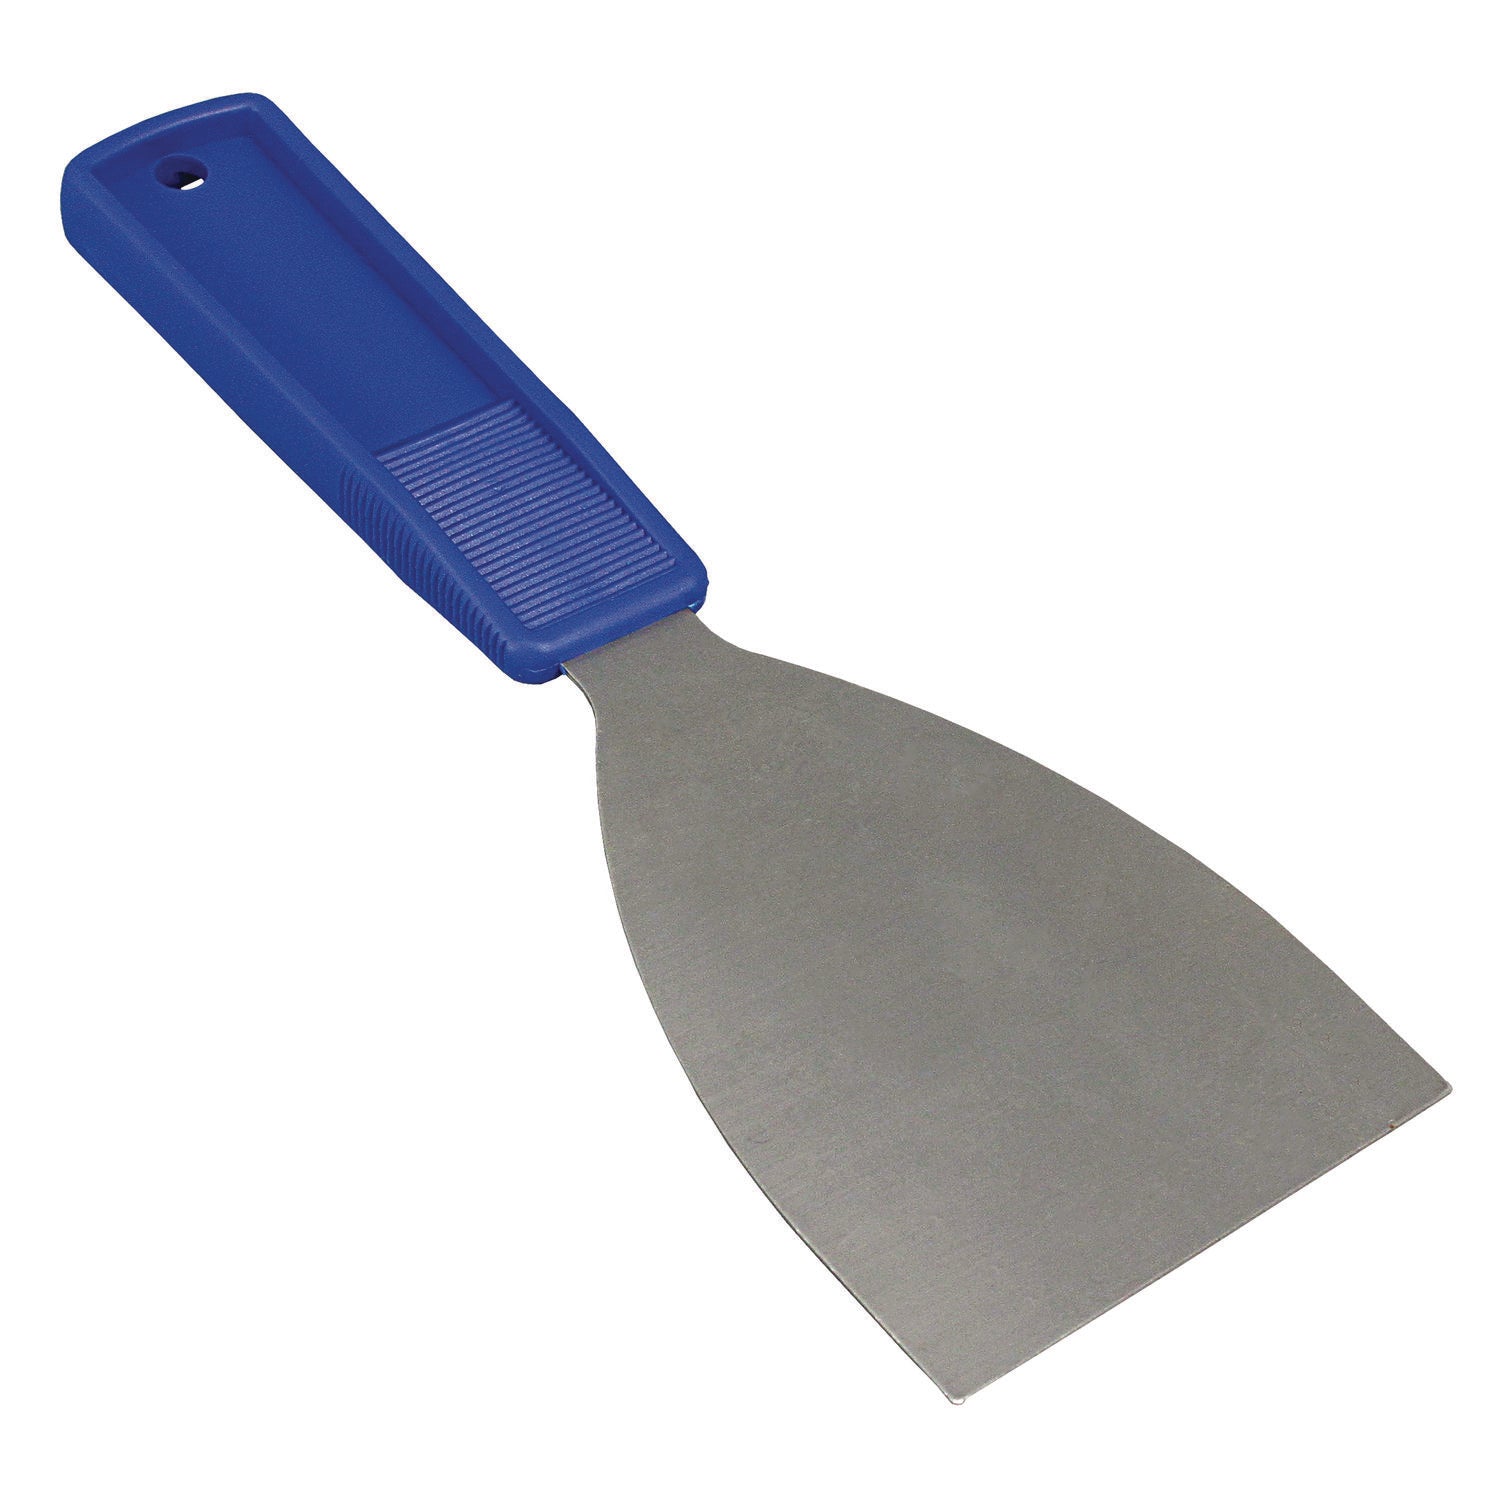 putty-knife-3-wide-stainless-steel-blade-blue-polypropylene-handle_imp3401dz - 3